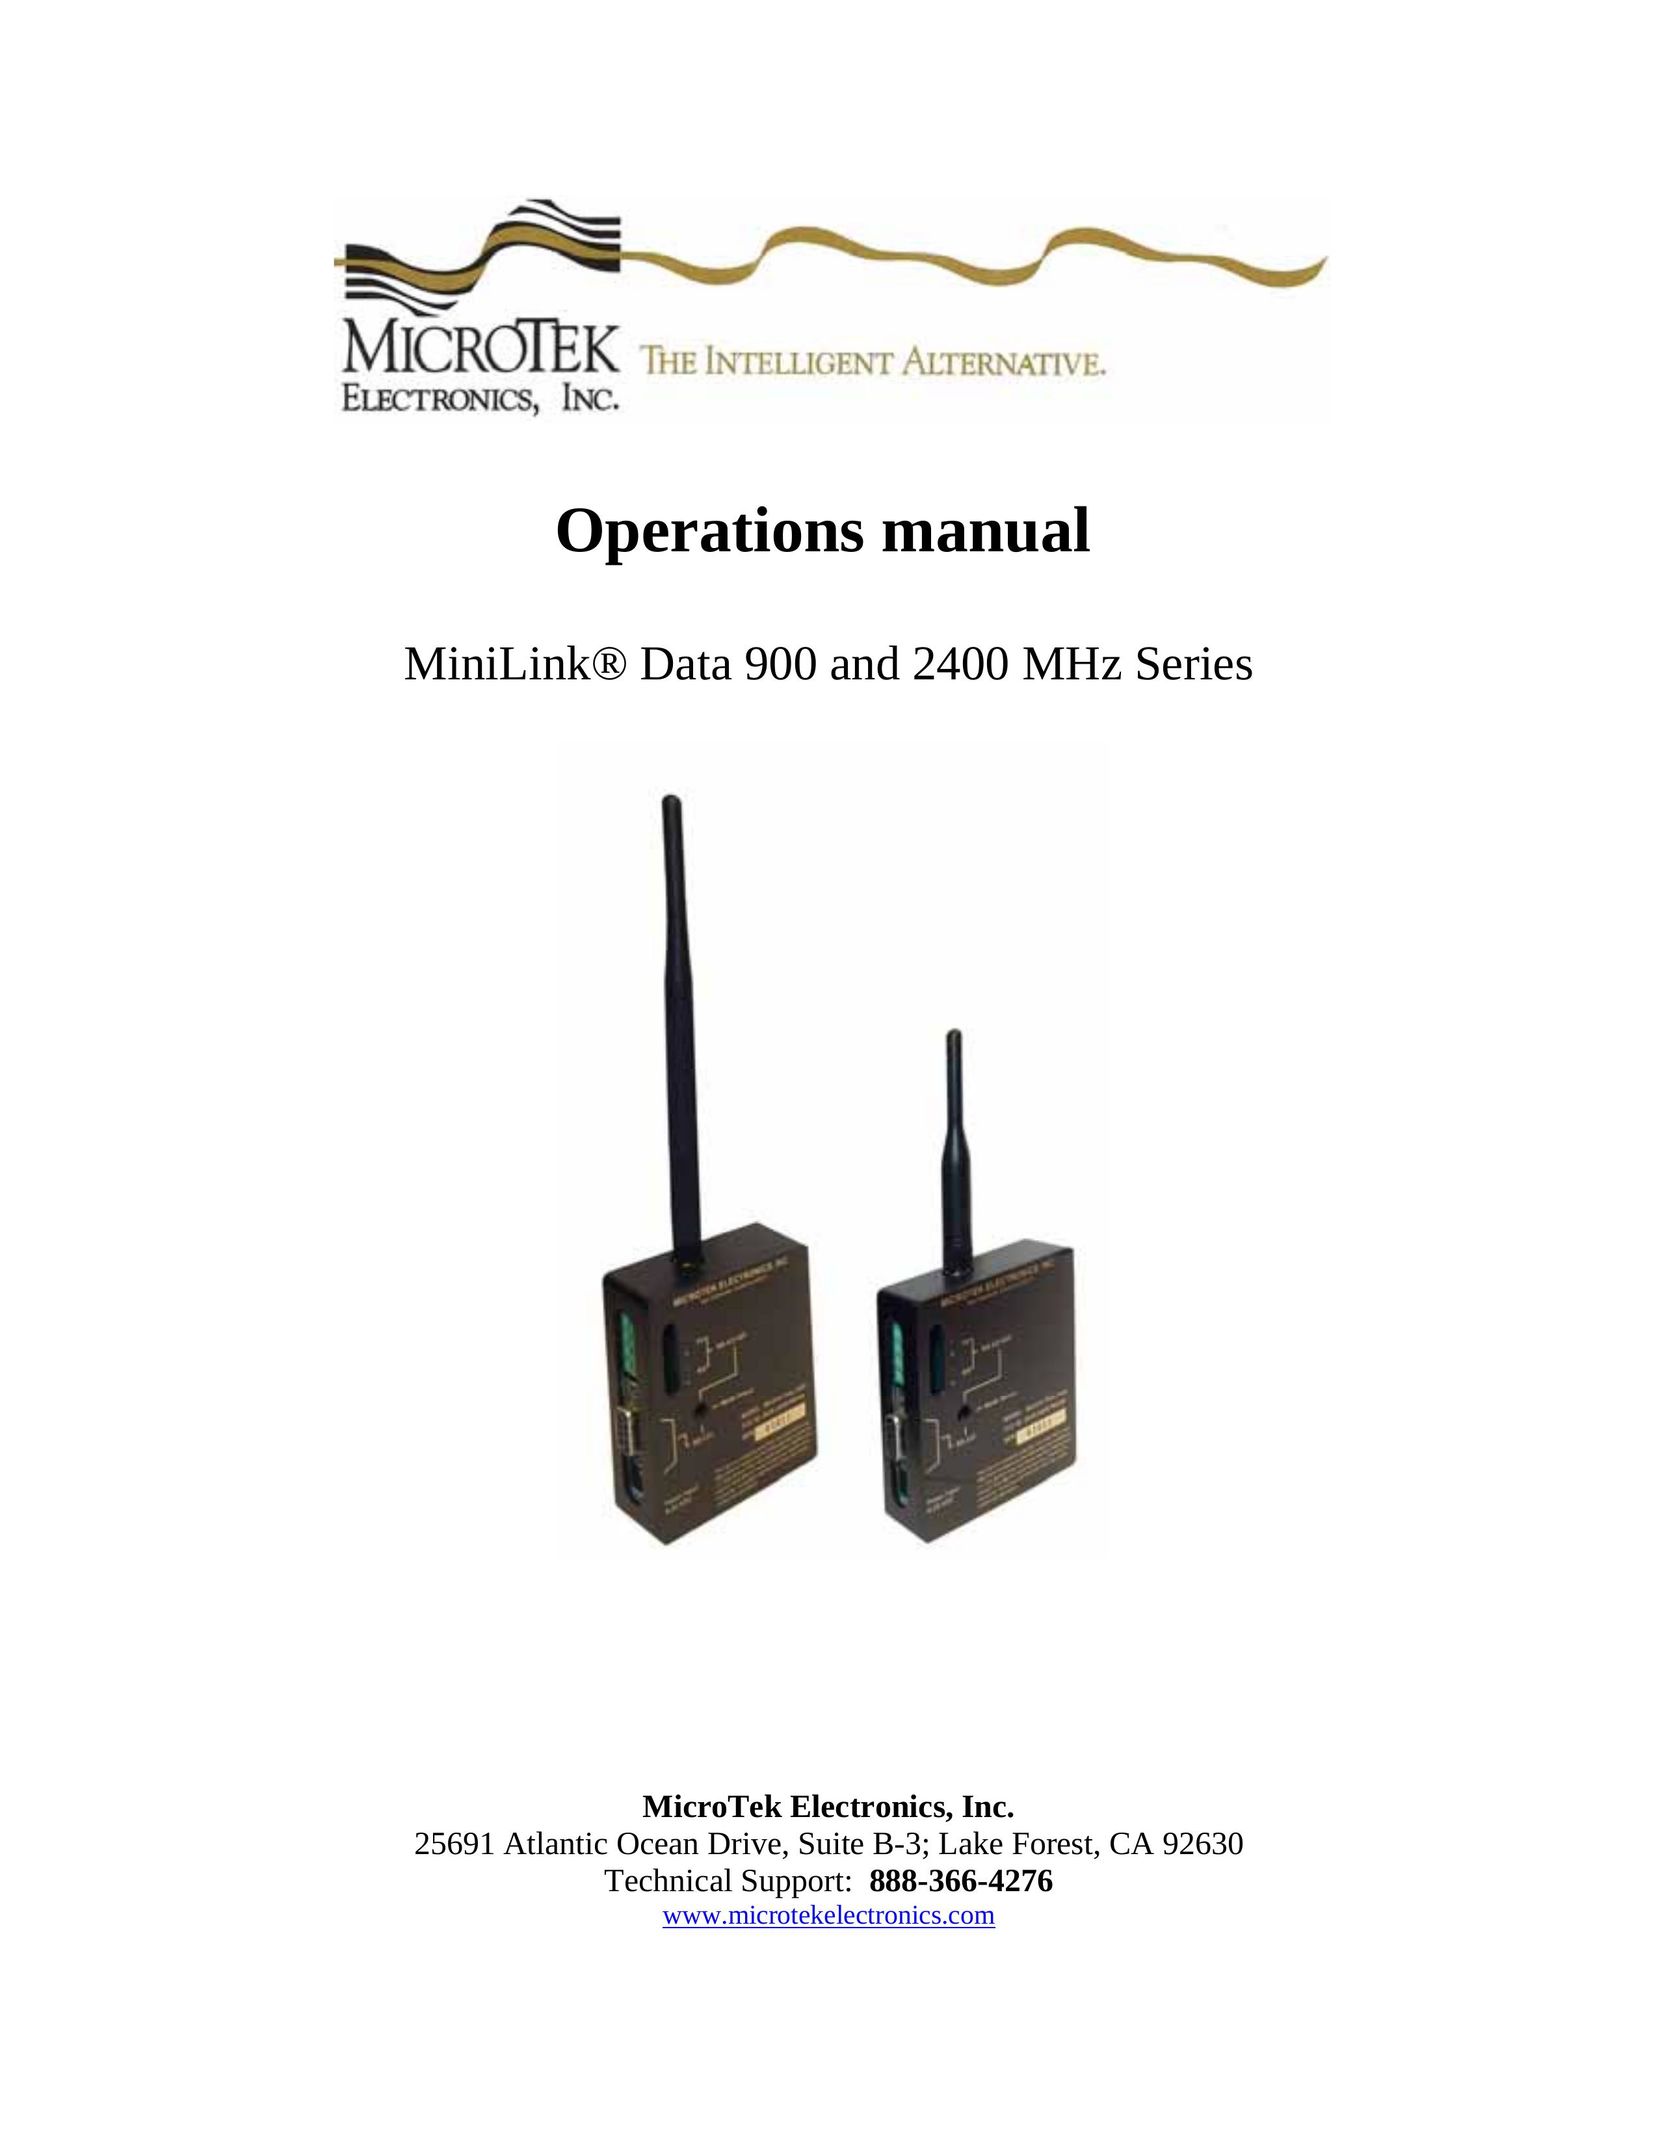 Microtek 2400 MHz Series Two-Way Radio User Manual